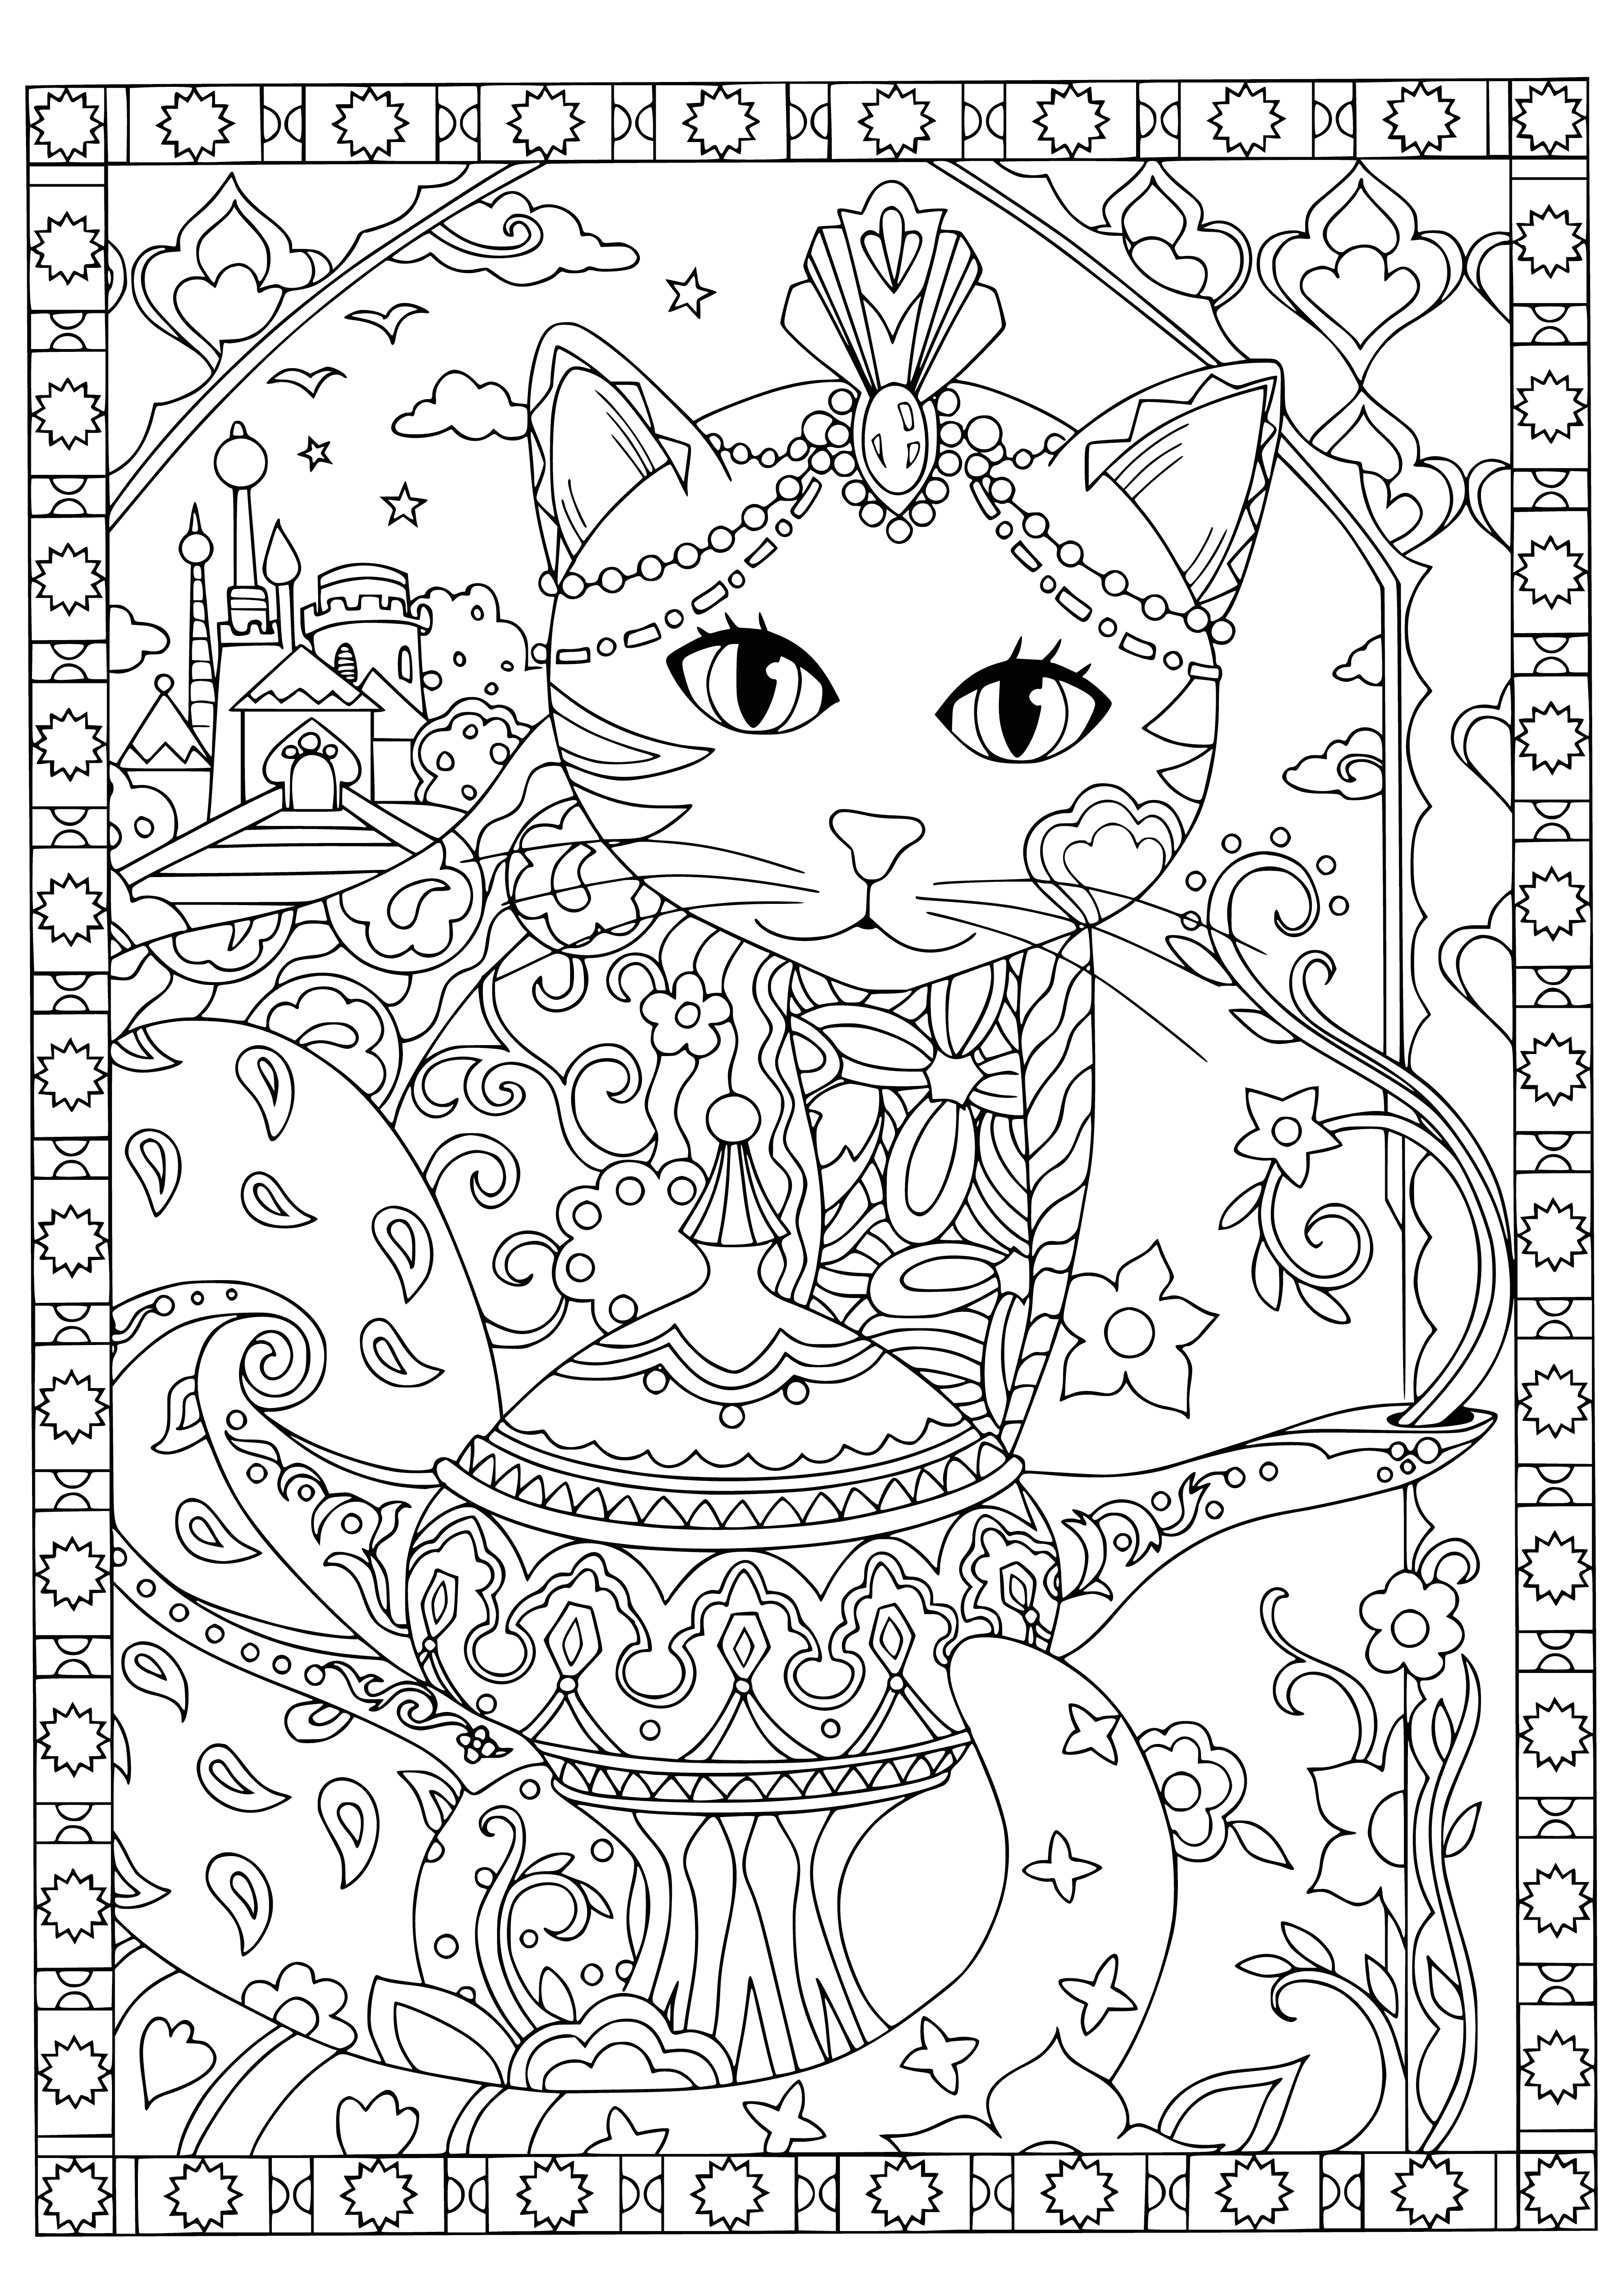 Tea ceremony coloring page